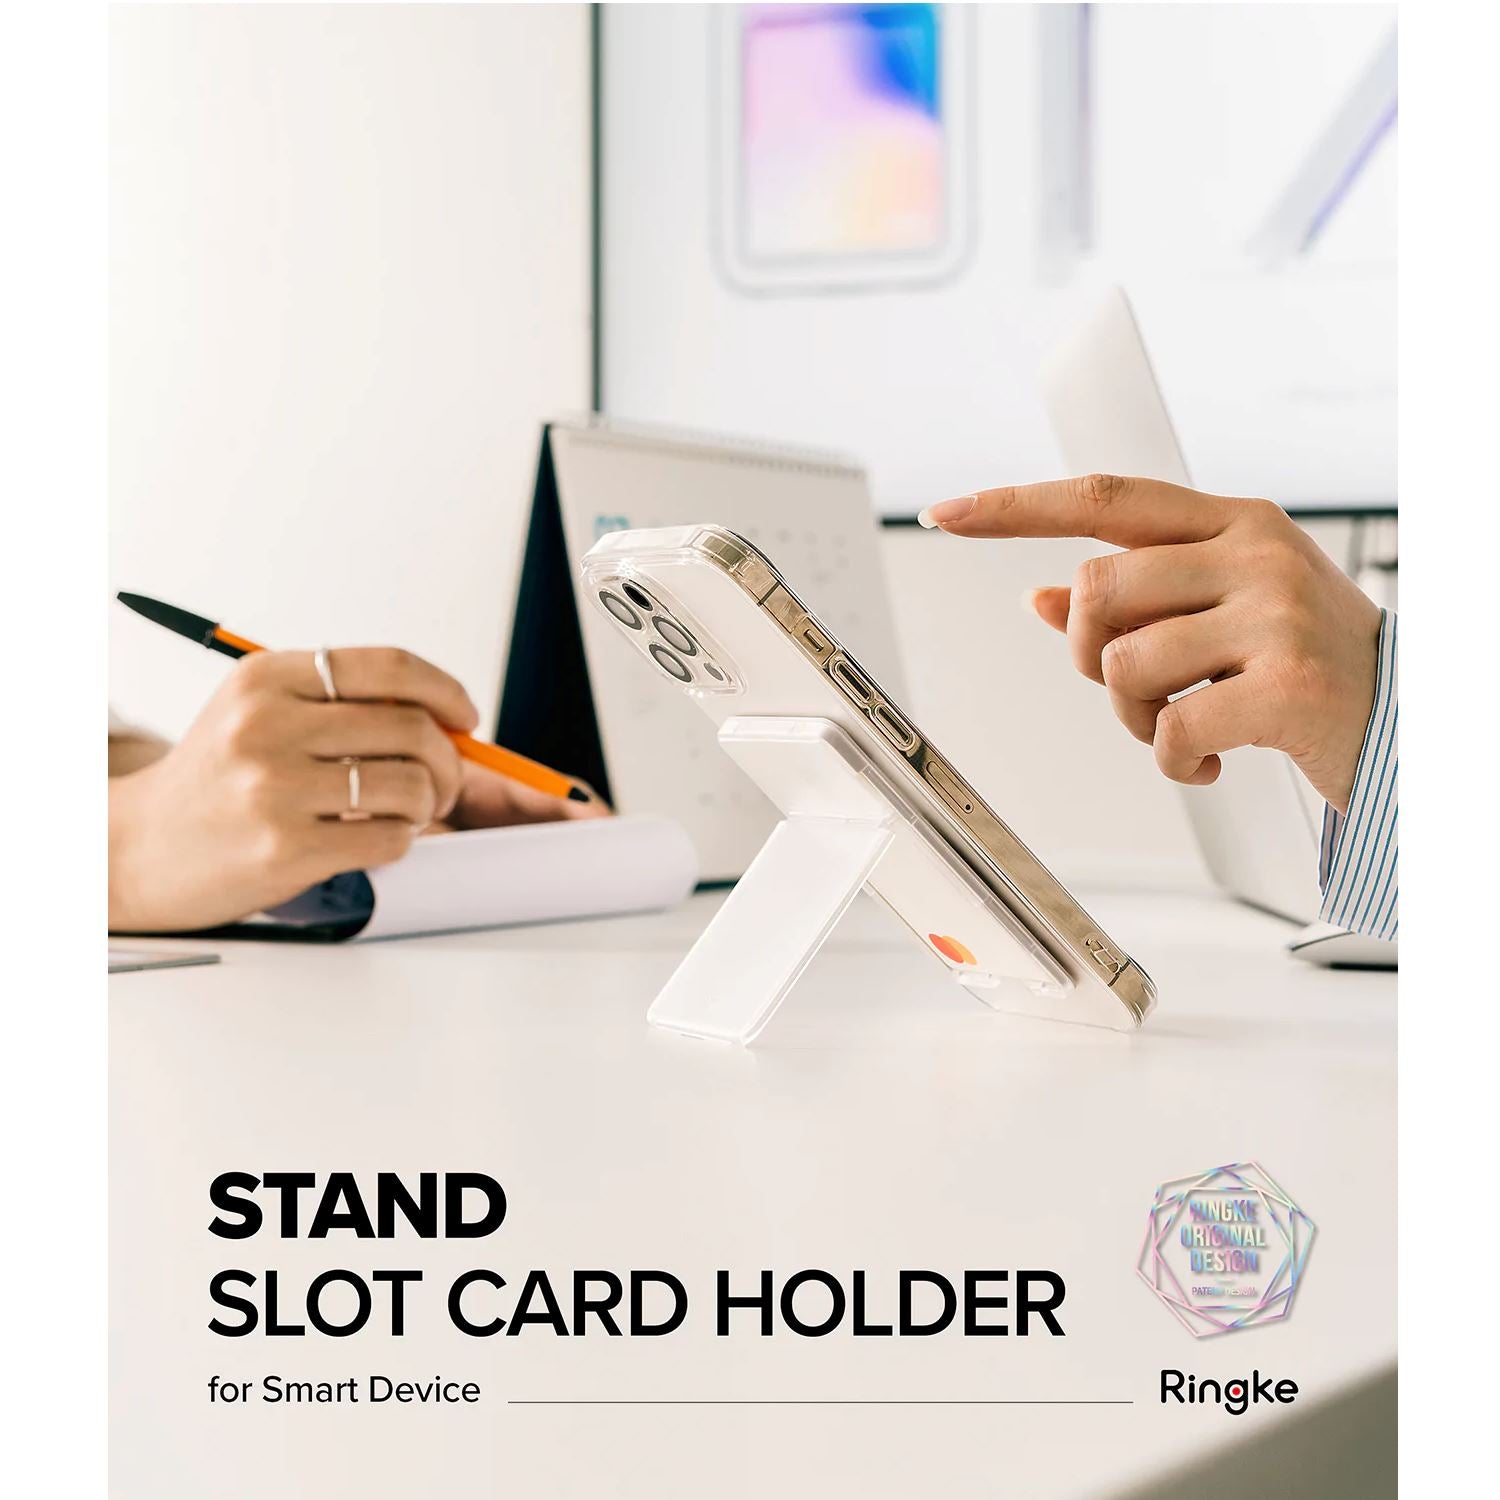 Ringke Stand Slot Card Holder ONE2WORLD 